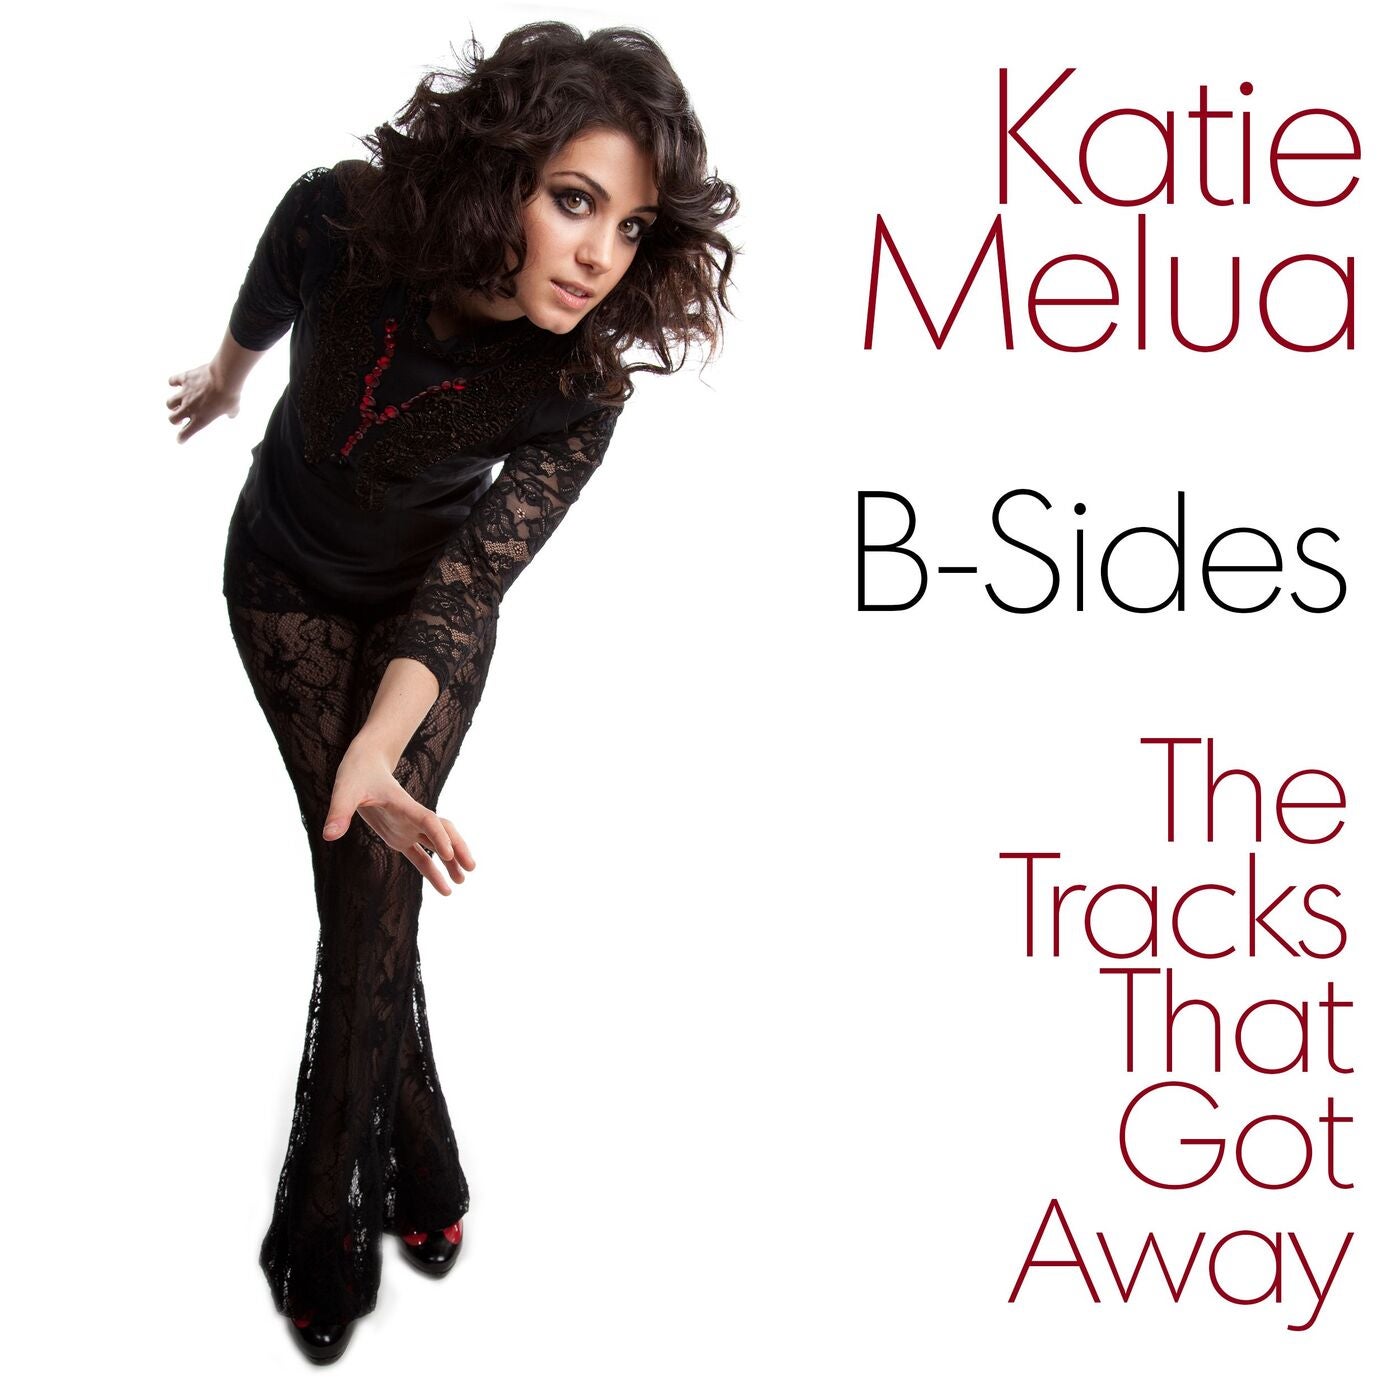 Katie melua wonderful life. Katie Melua. Ultimate collection Кэти Мелуа. Katie Melua - wonderful Life обложка альбома. Katie Melua pictures.